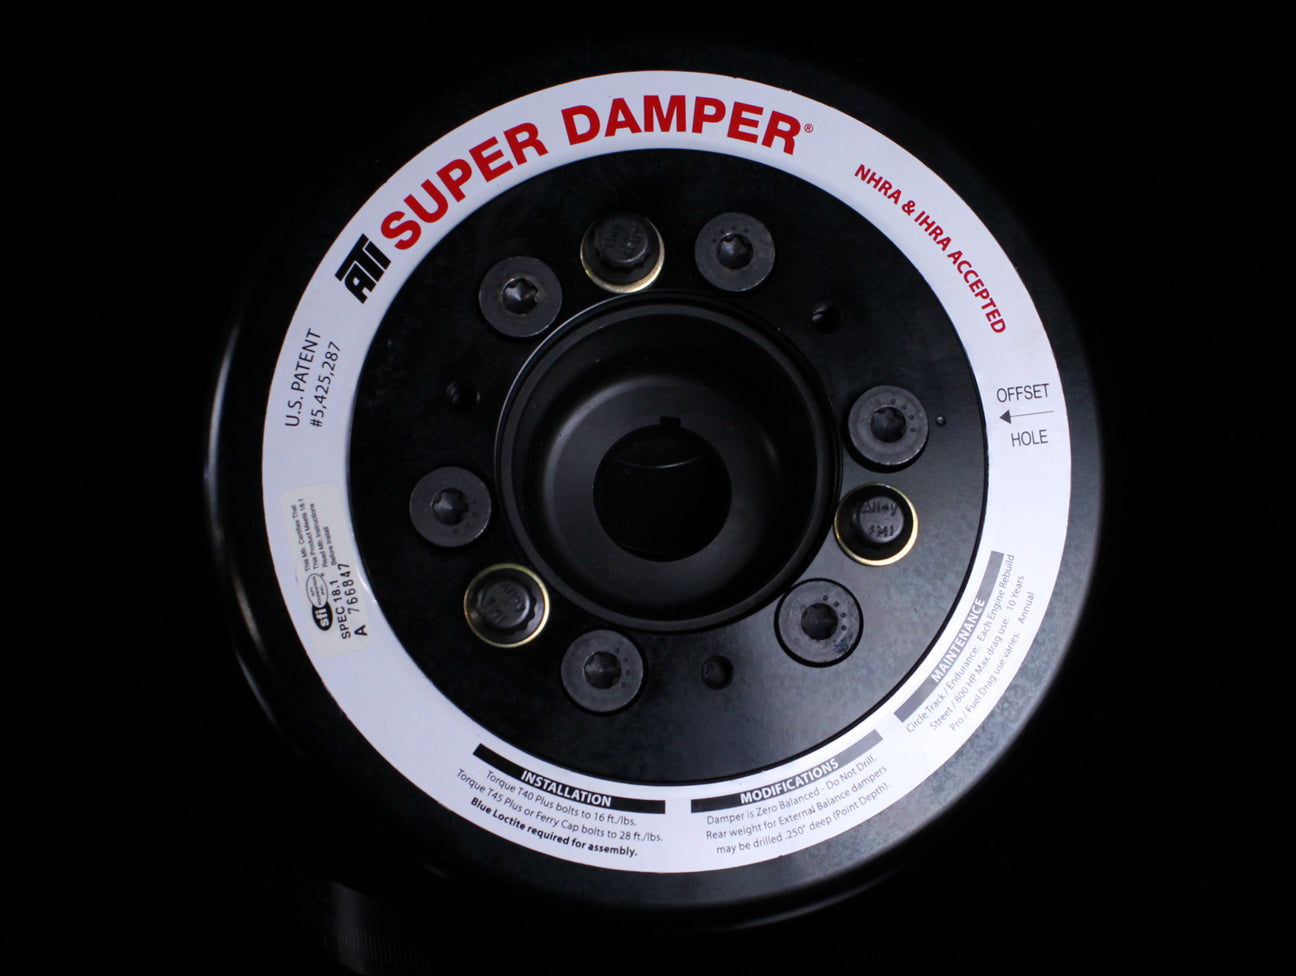 ATI Super Harmonic Race Damper - B-series